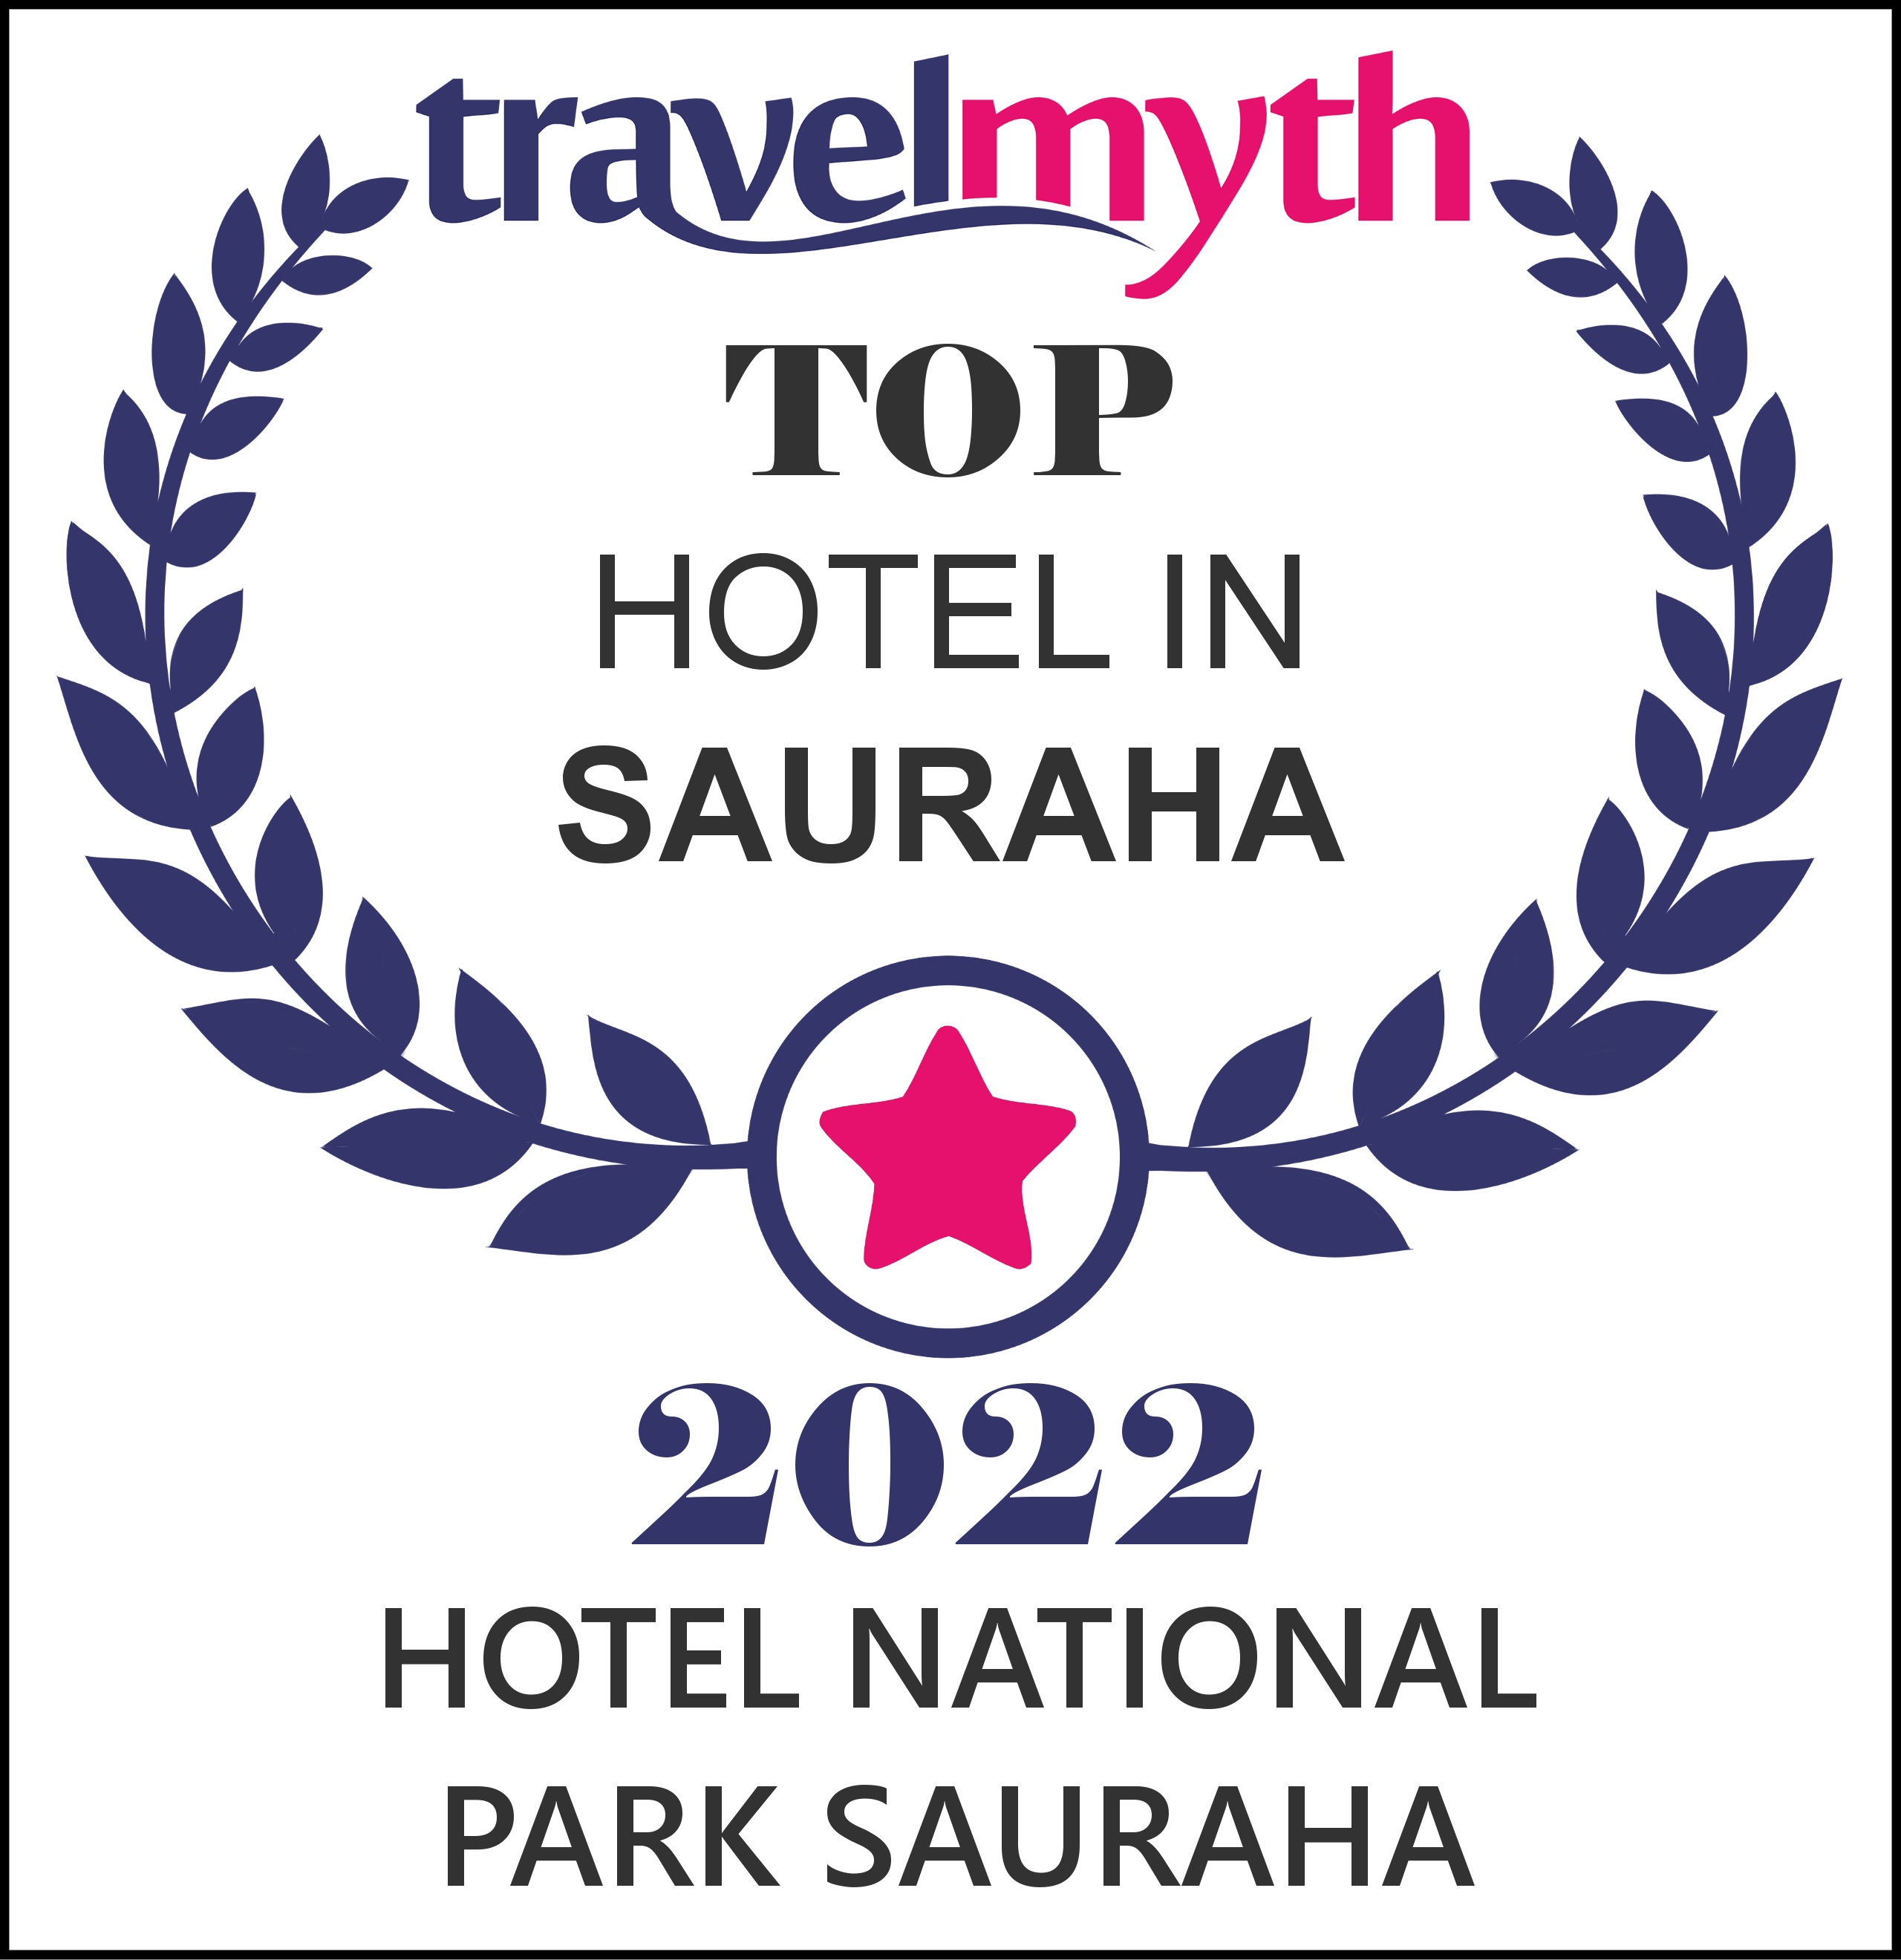 Top Hotel in Sauraha 2022